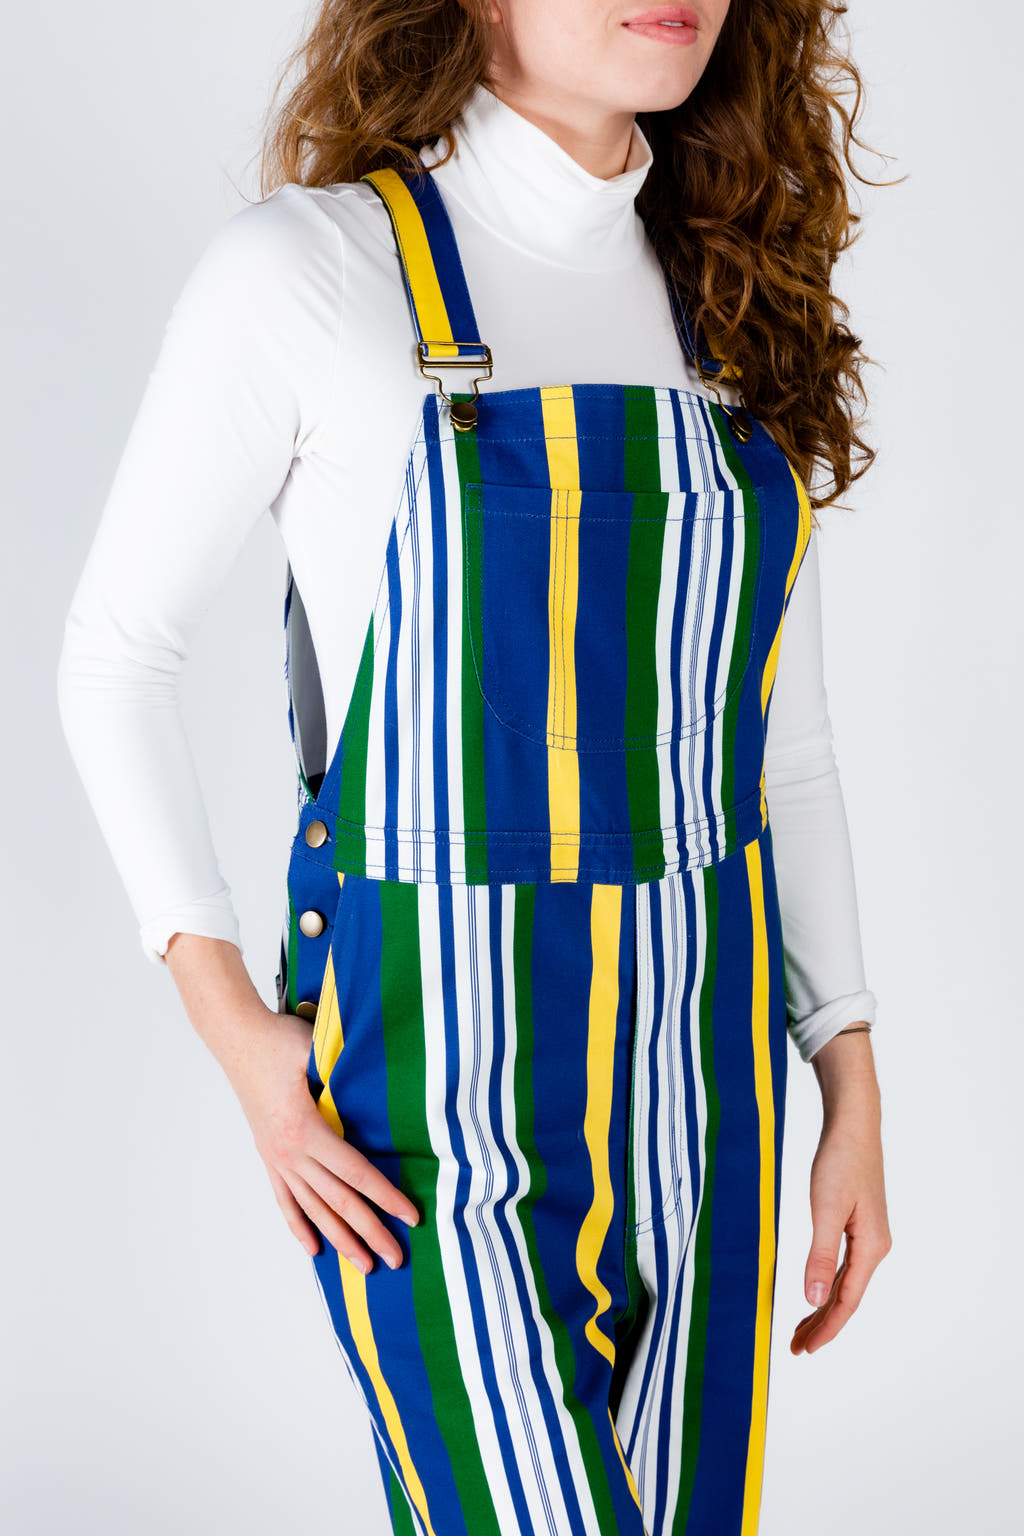 colorful stripe overalls for women